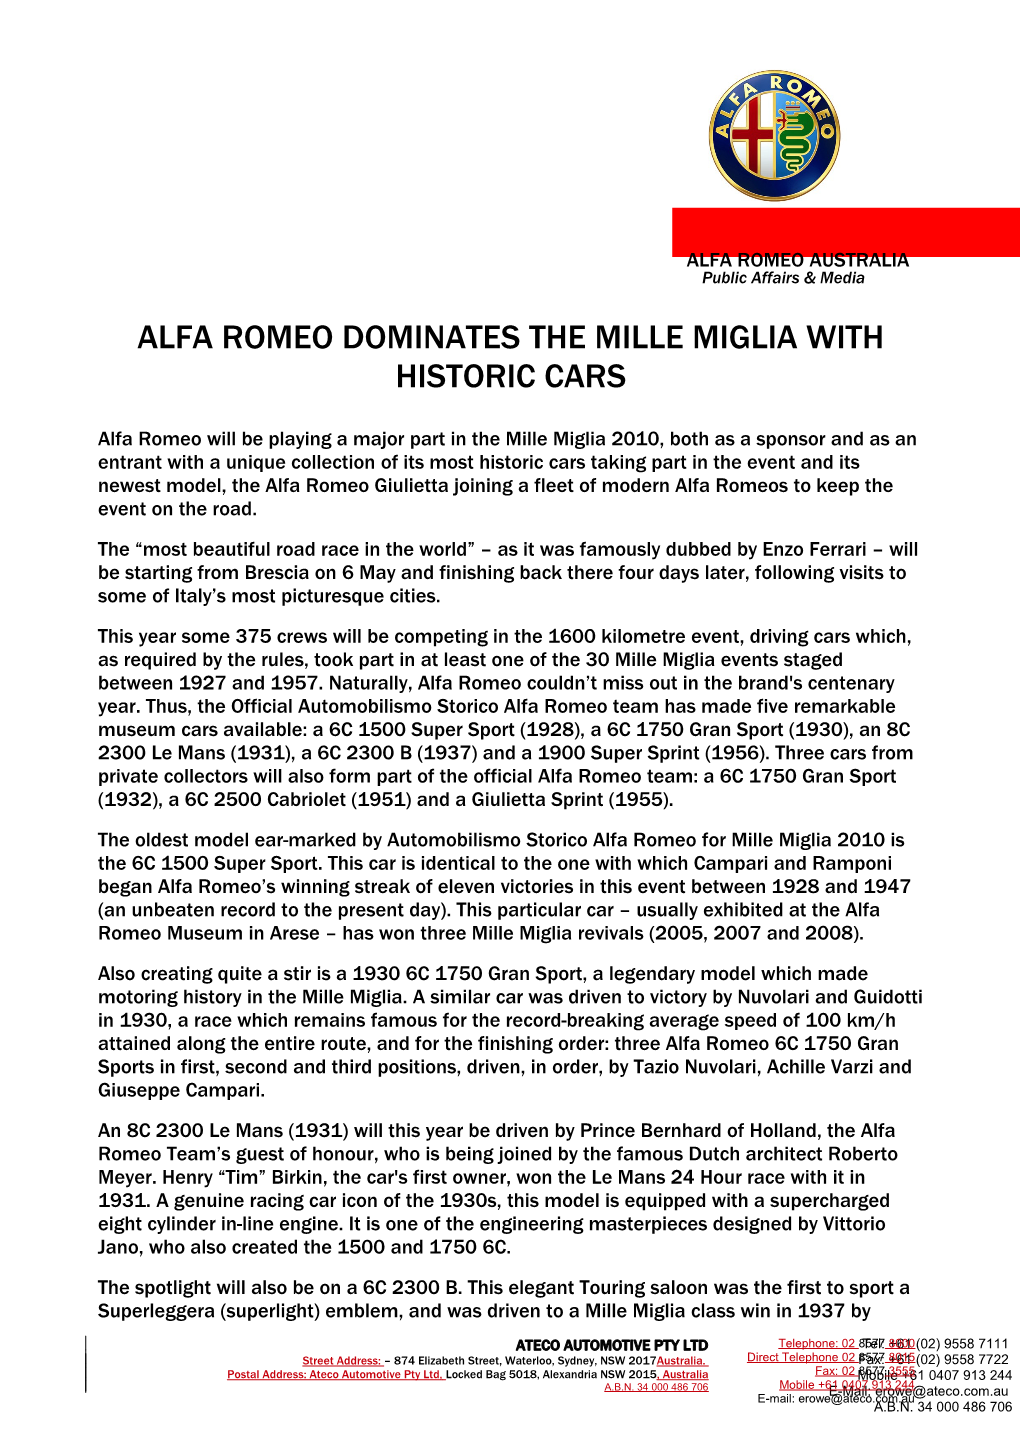 Alfa Romeo Dominates the Mille Miglia with Historic Cars